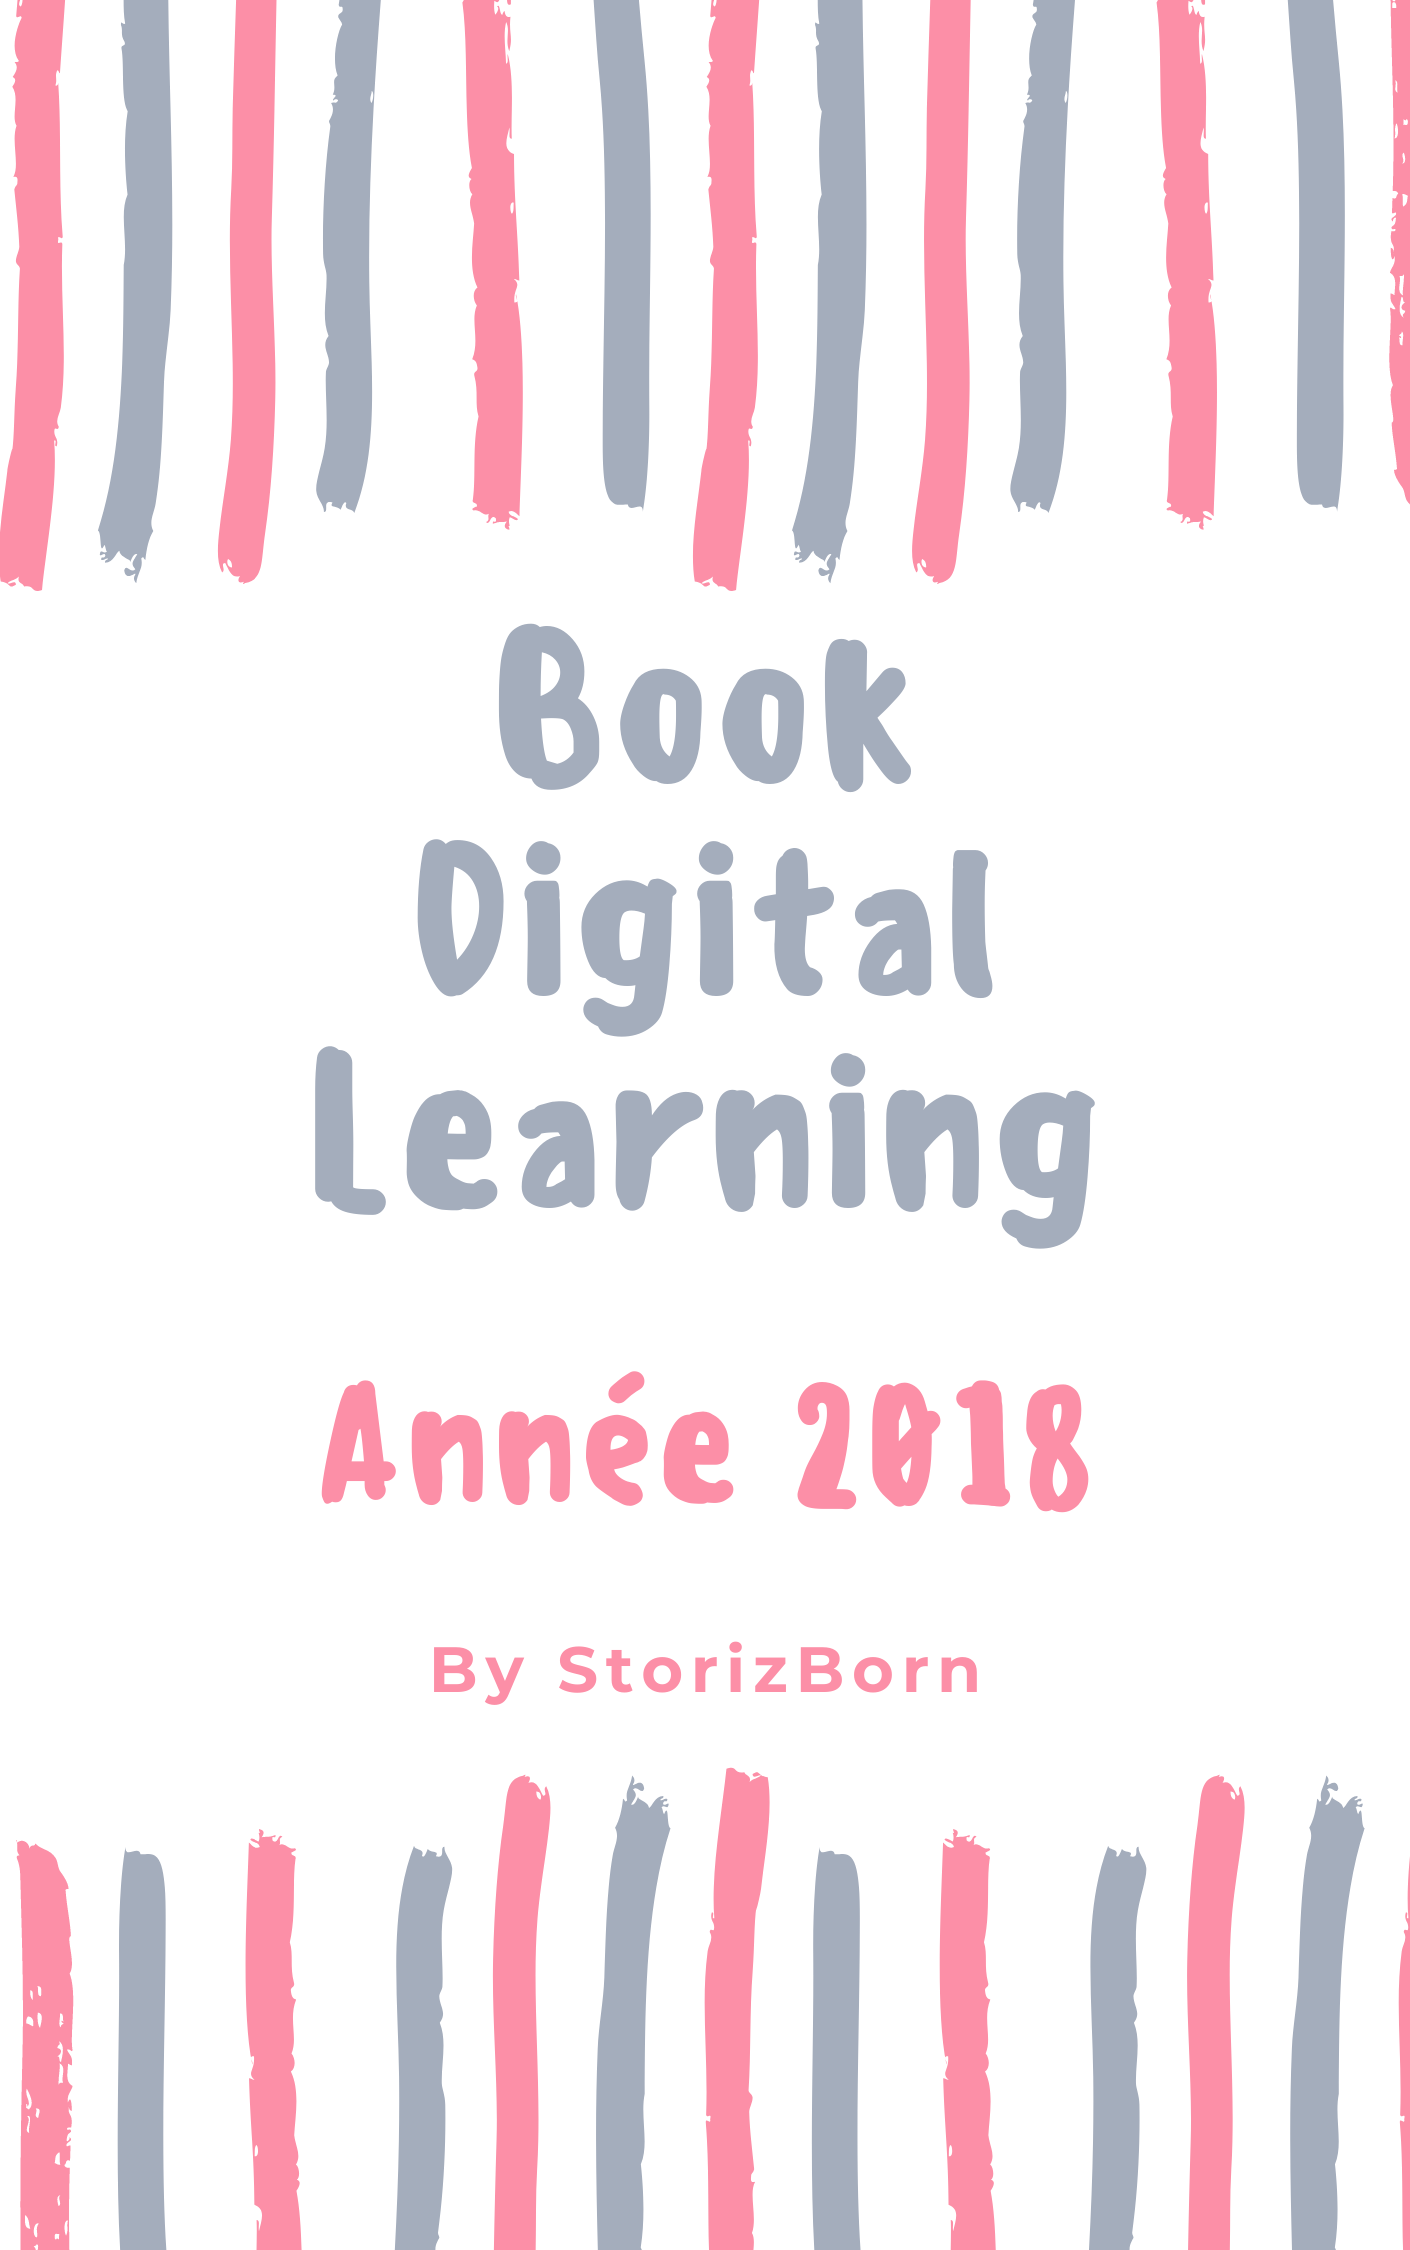 Book digital Learning - 2018